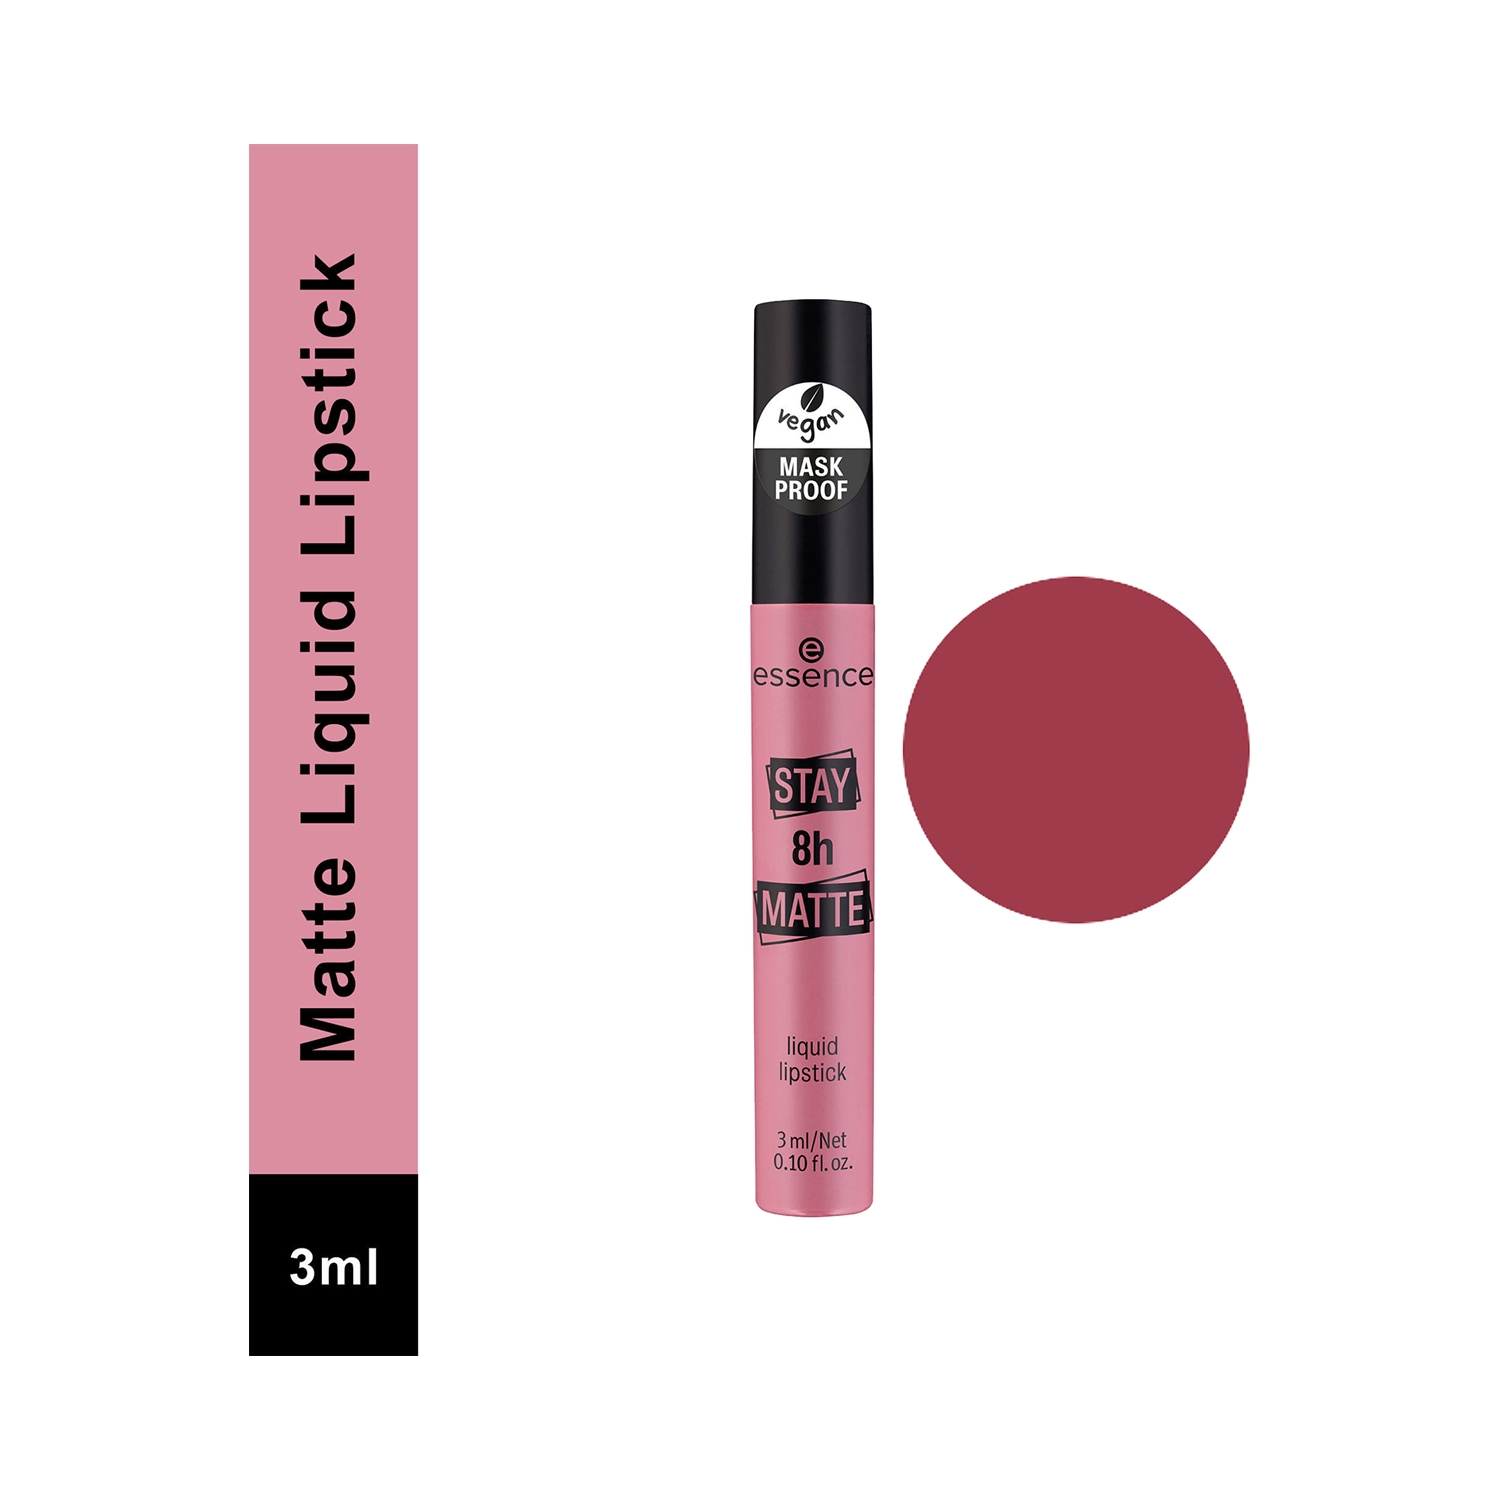 Essence | Essence Stay 8H Matte Liquid Lipstick - 05 Date Proof (3ml)